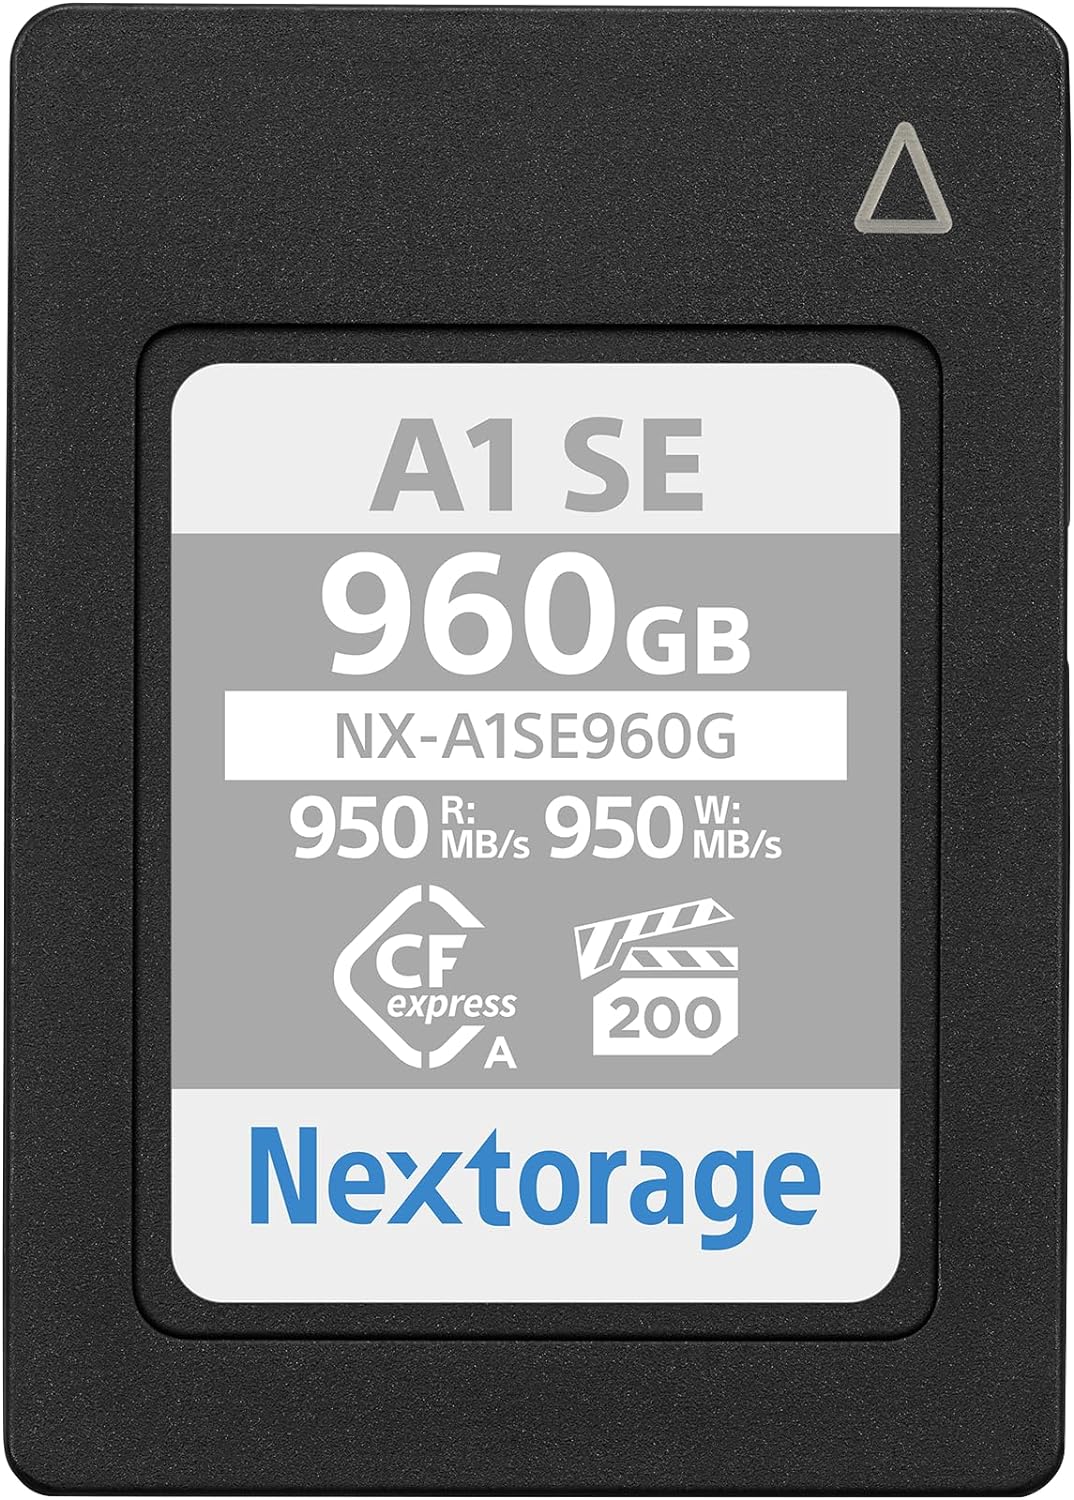 Nextorage ネクストレージ 国内メーカー 960GB CFexpress Type A VPG200 メモリーカード NX-A1SEシリーズ 最大読み出し速度950MB/s 最大書き込み速度950MB/s SONY α NX-A1SE960G/INE